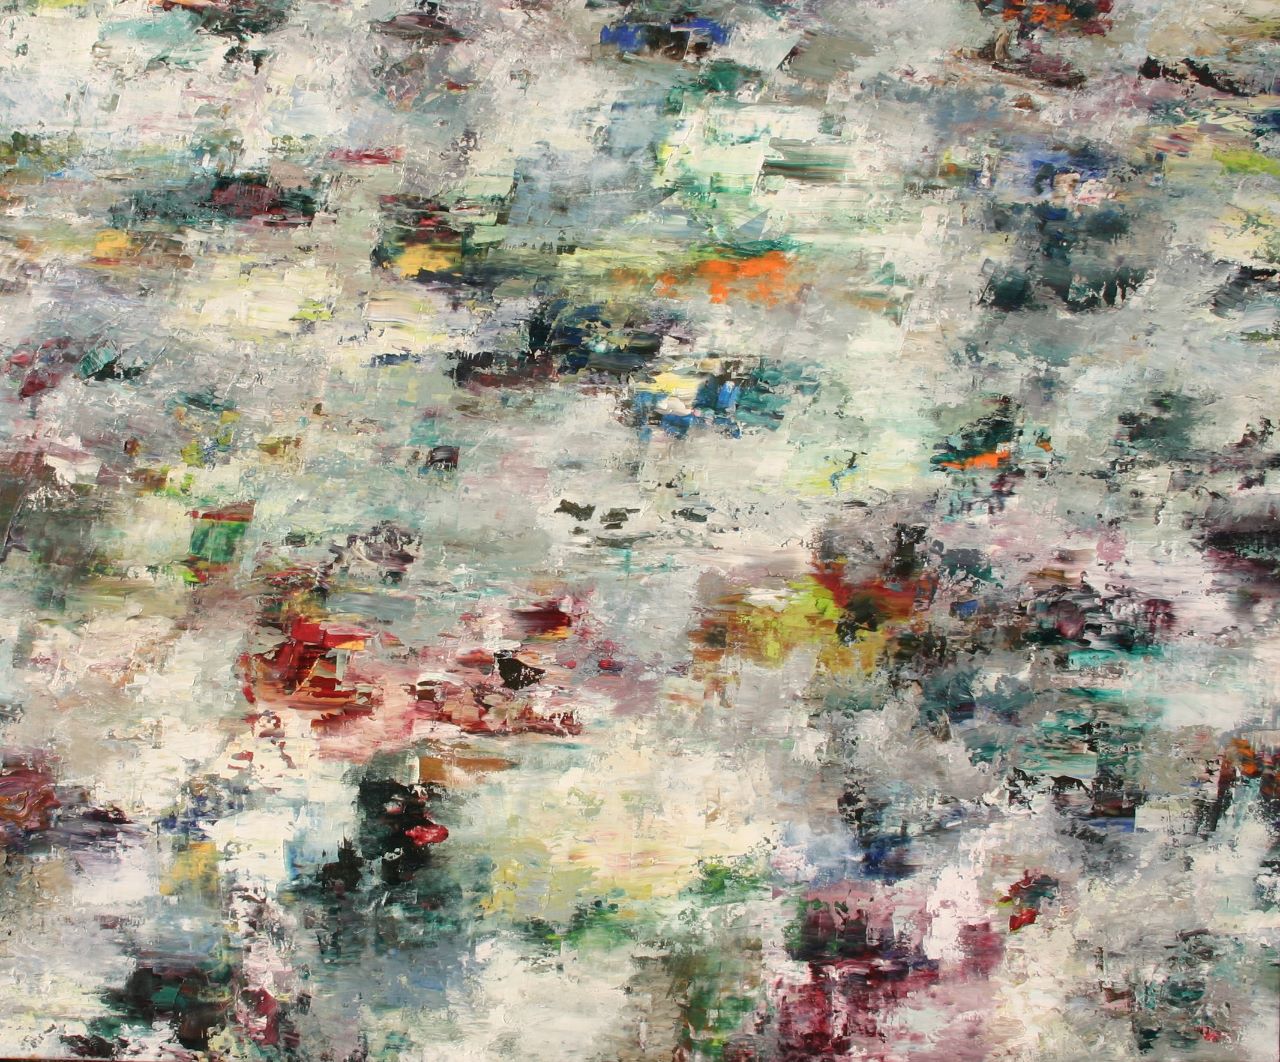 Rudi Weiss, Fluss, 27-2015, Öl auf Leinwand, 120 cm x 145 cm, Preis: 4.900 €, wer012kü